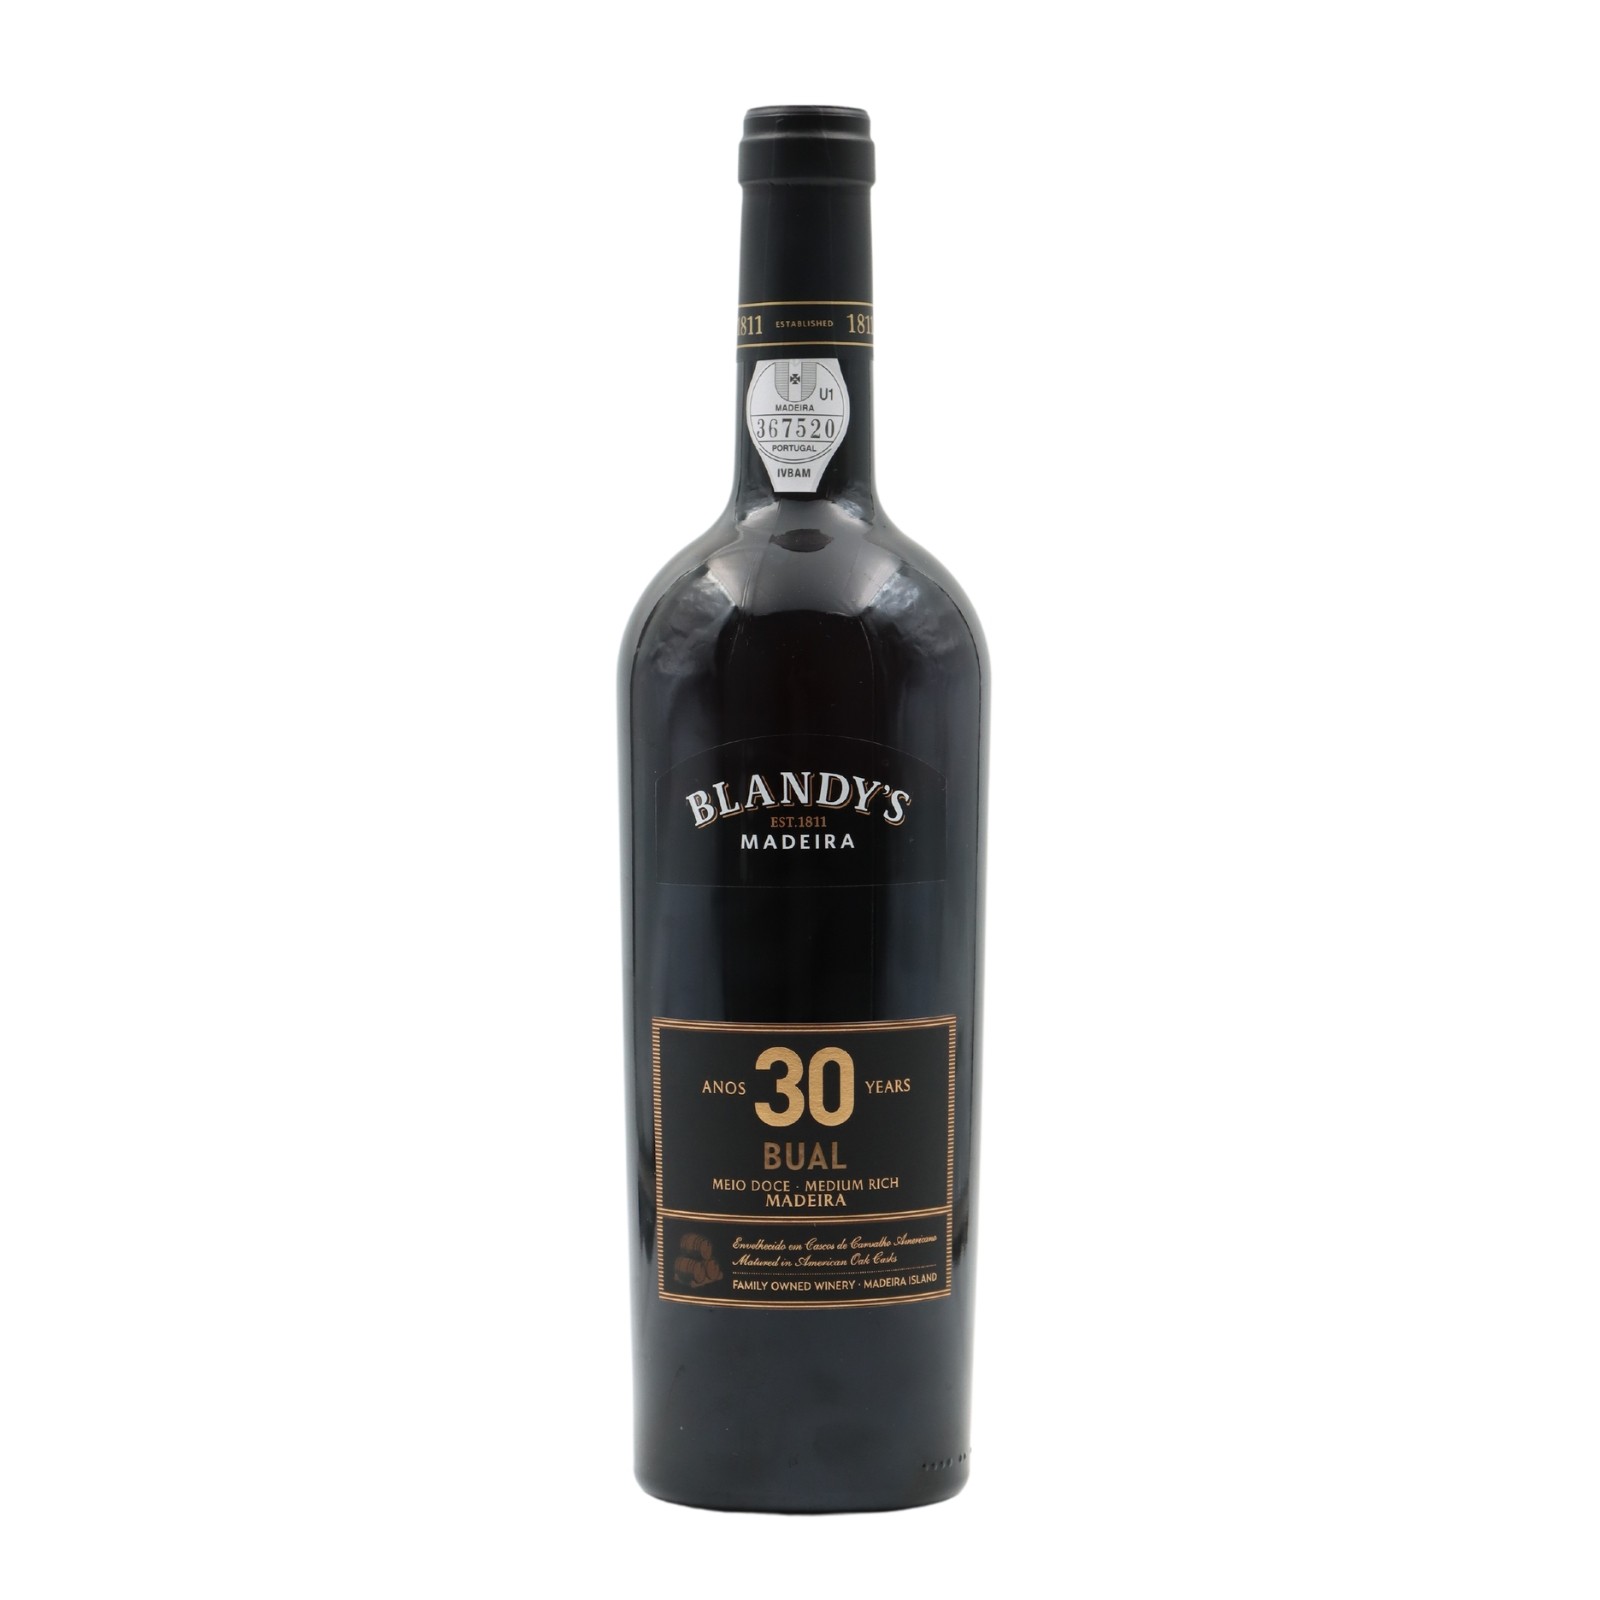 Blandys 30 years Bual Madeira